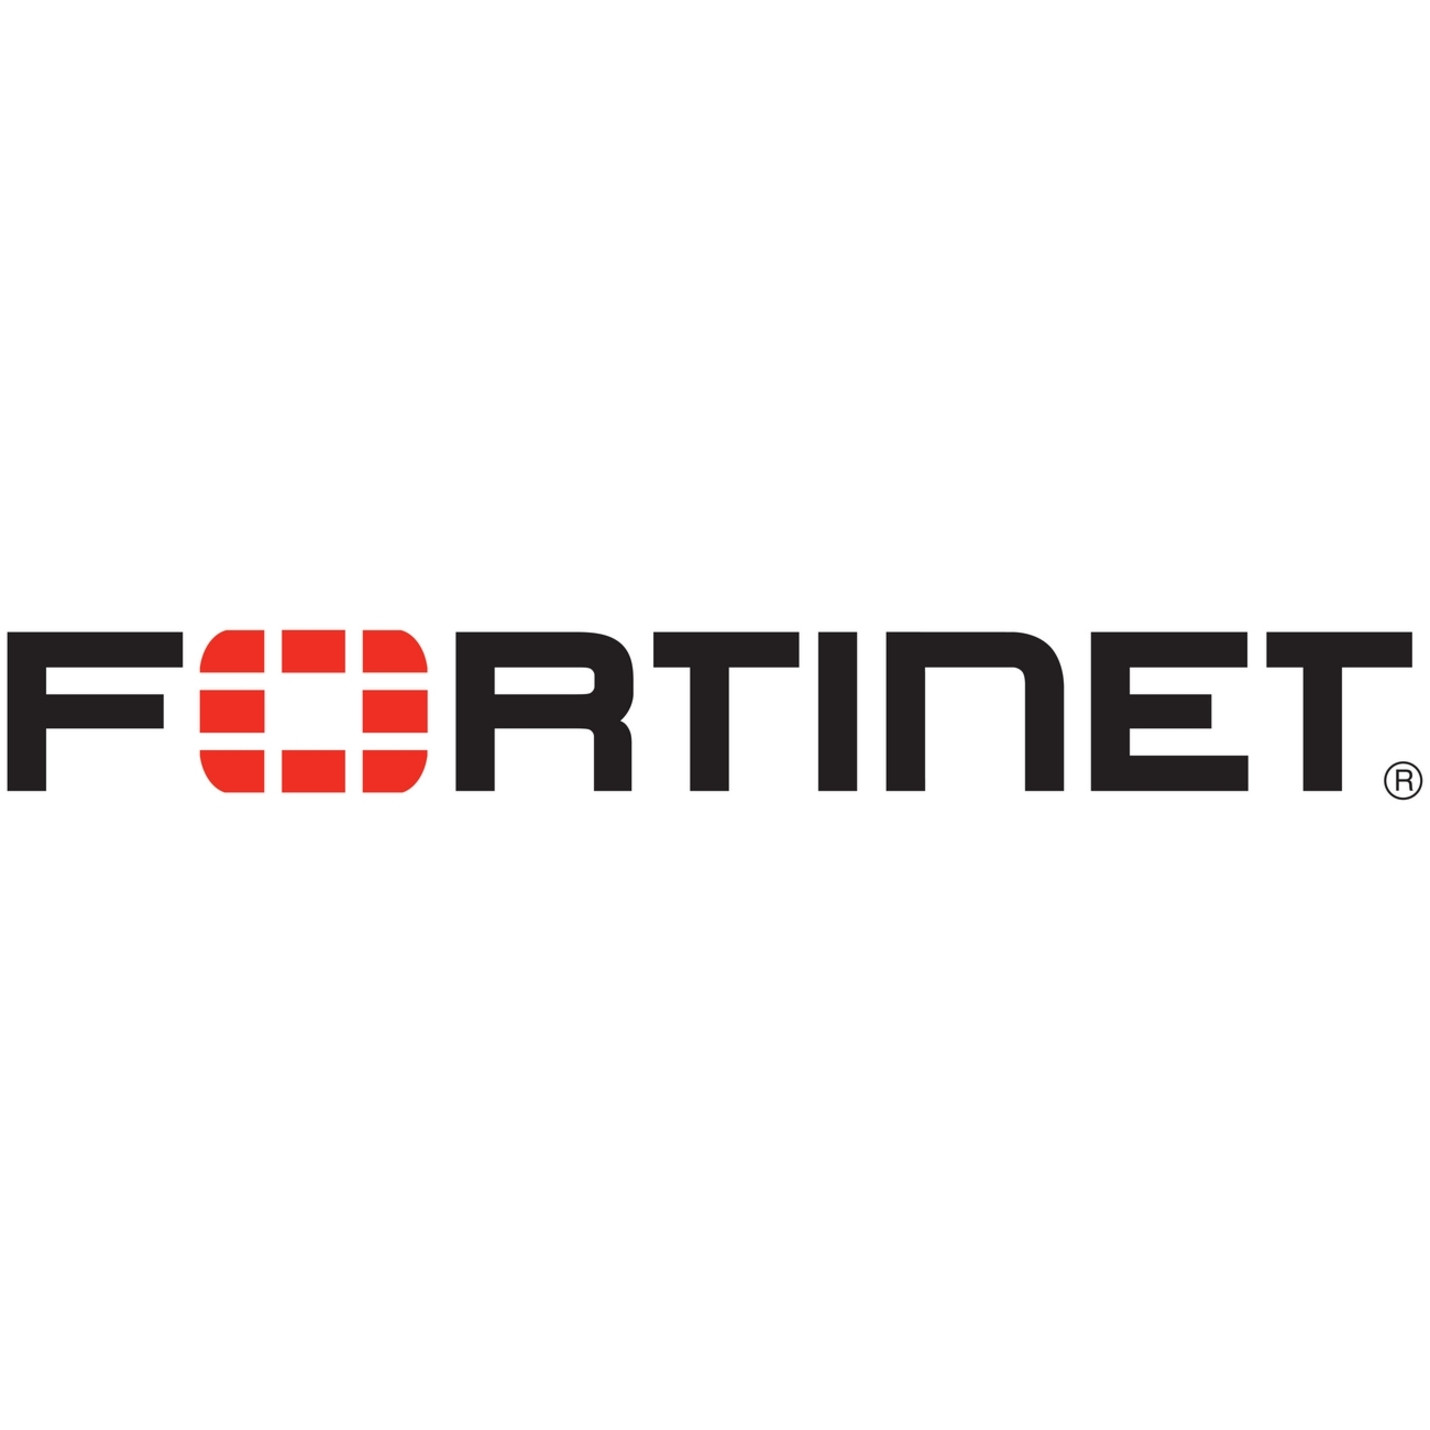 Fortinet Enterprise Bundle (FortiCare plus NGFW, AV, Web Filtering, Antispam, Botnet IP/Domain, FortiSandbox Cloud and Mobile Secu… FC-10-03961-974-0…